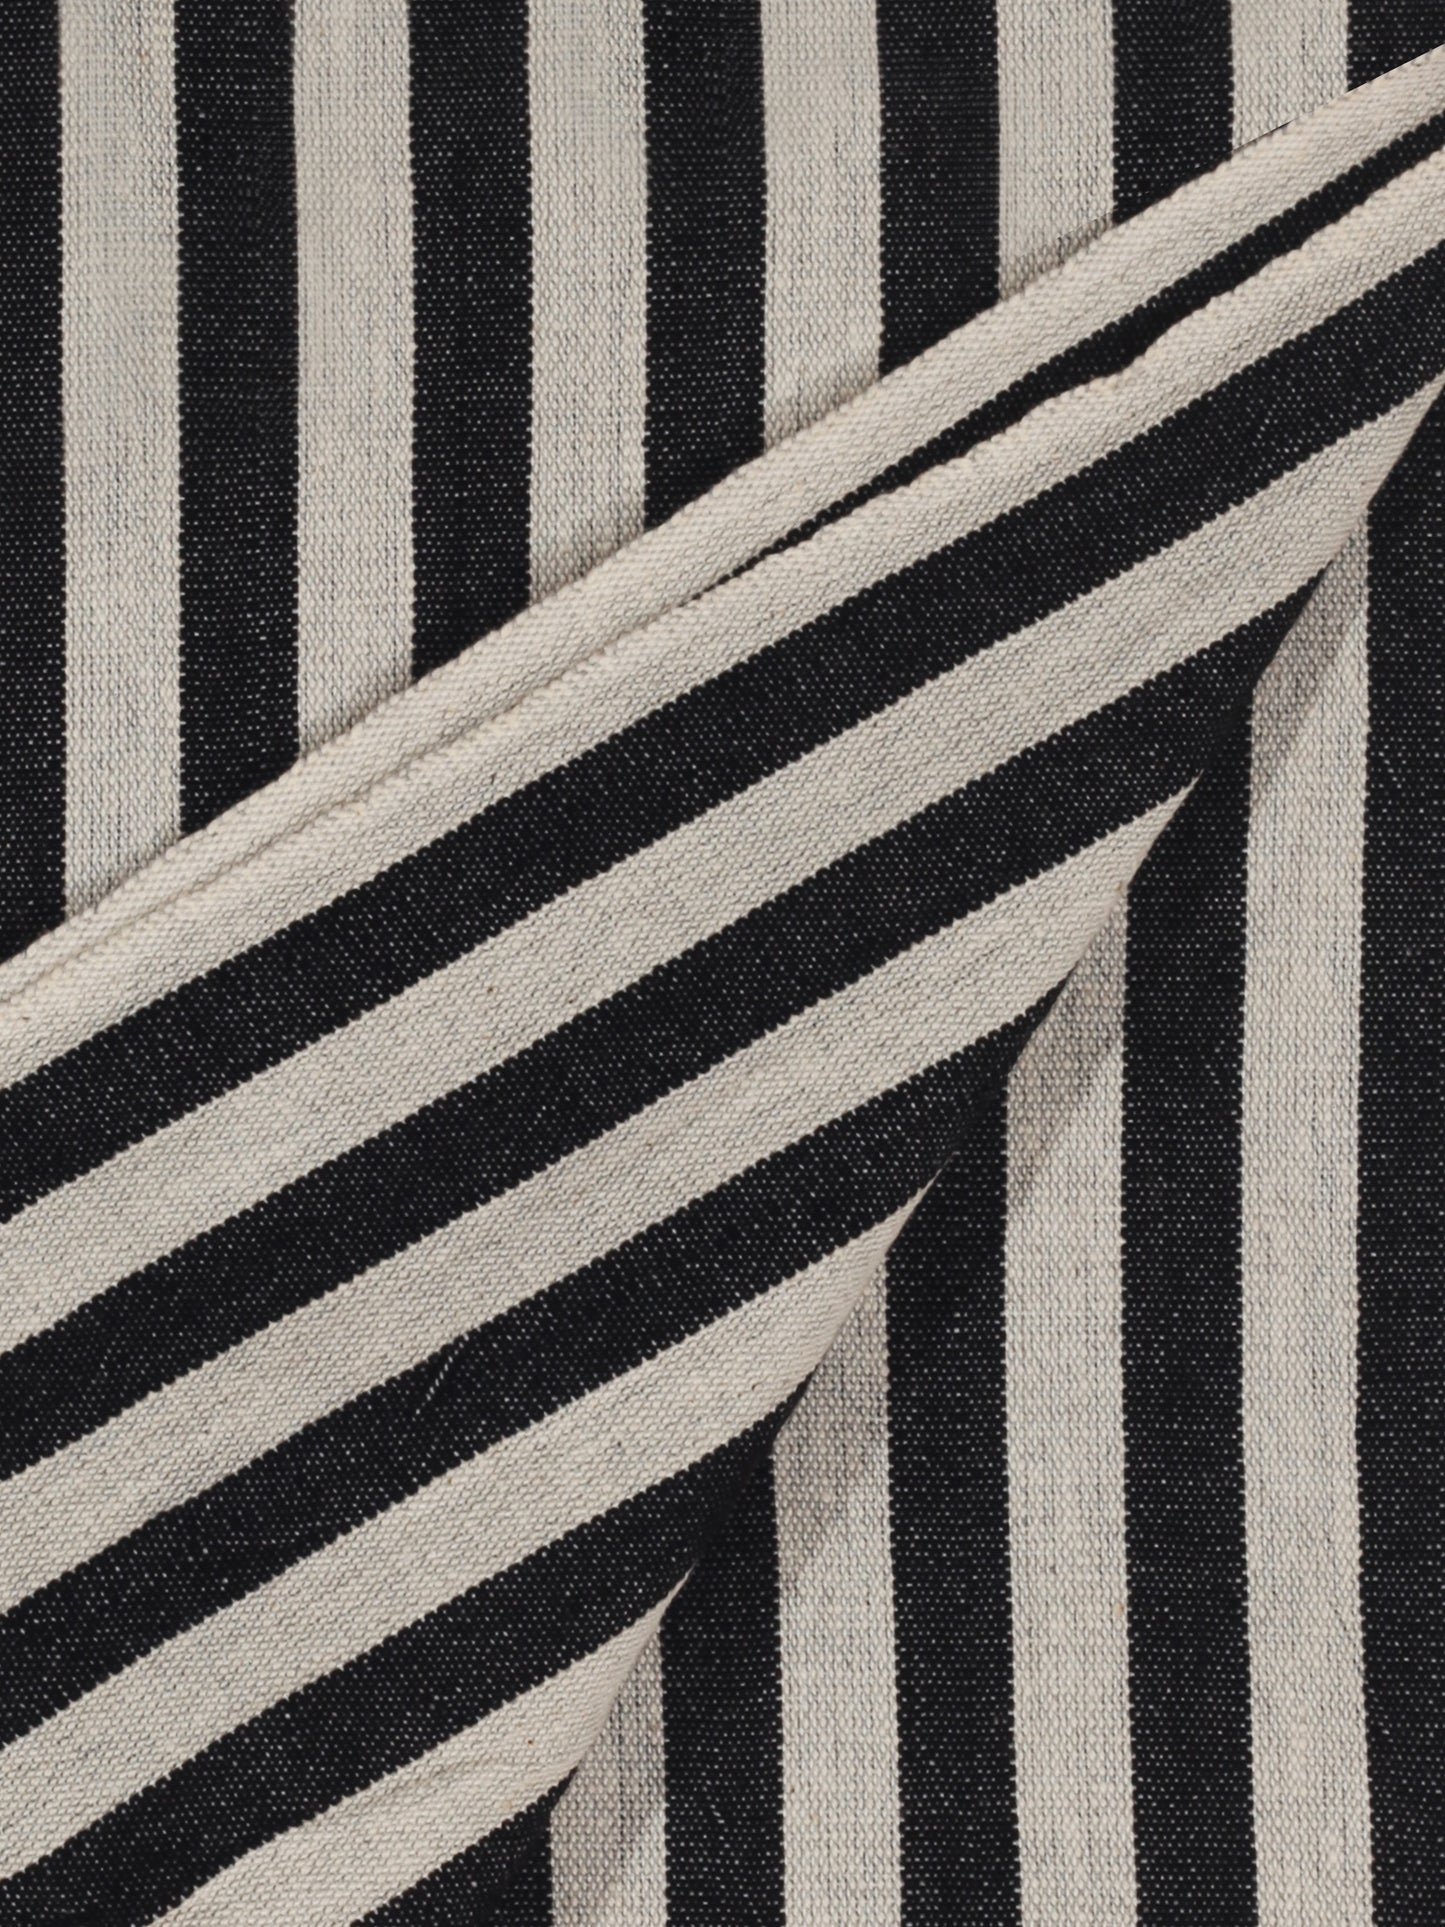 Federa Striped Black